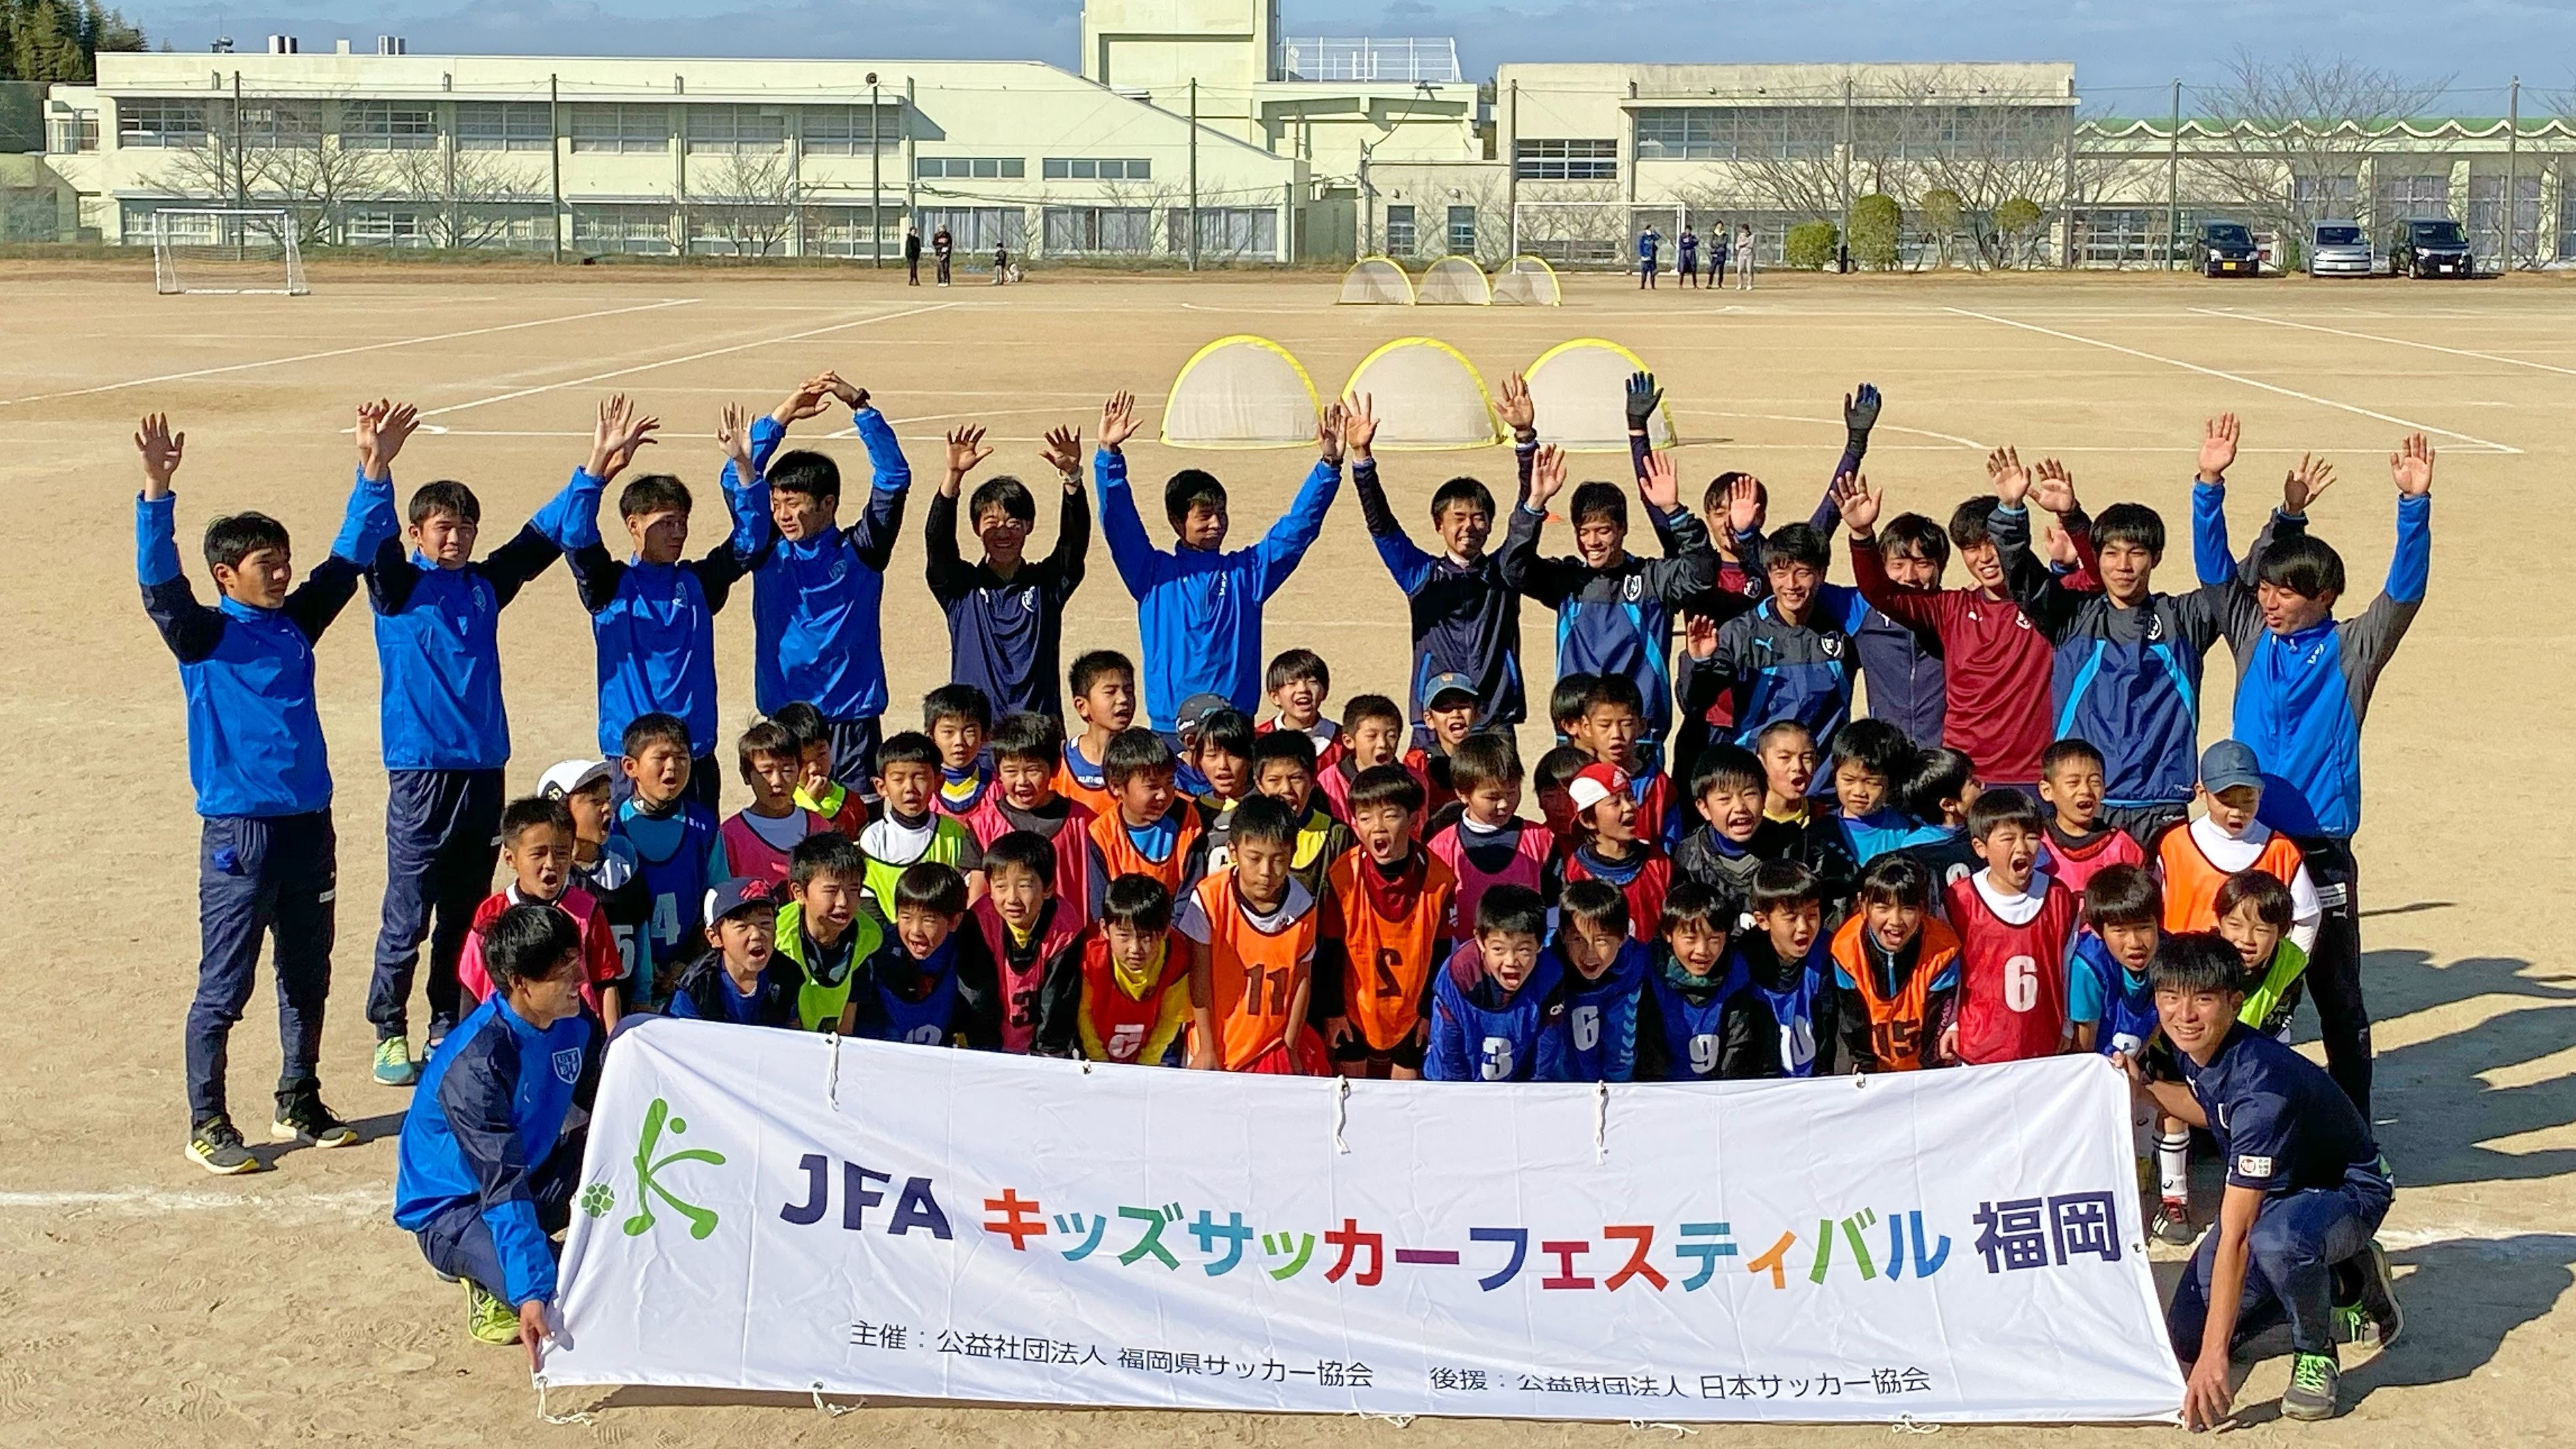 Jfaキッズ U 8 10 サッカーフェスティバル In 宗像市立自由ヶ丘南小学校グラウンド Jfa 公益財団法人日本サッカー協会